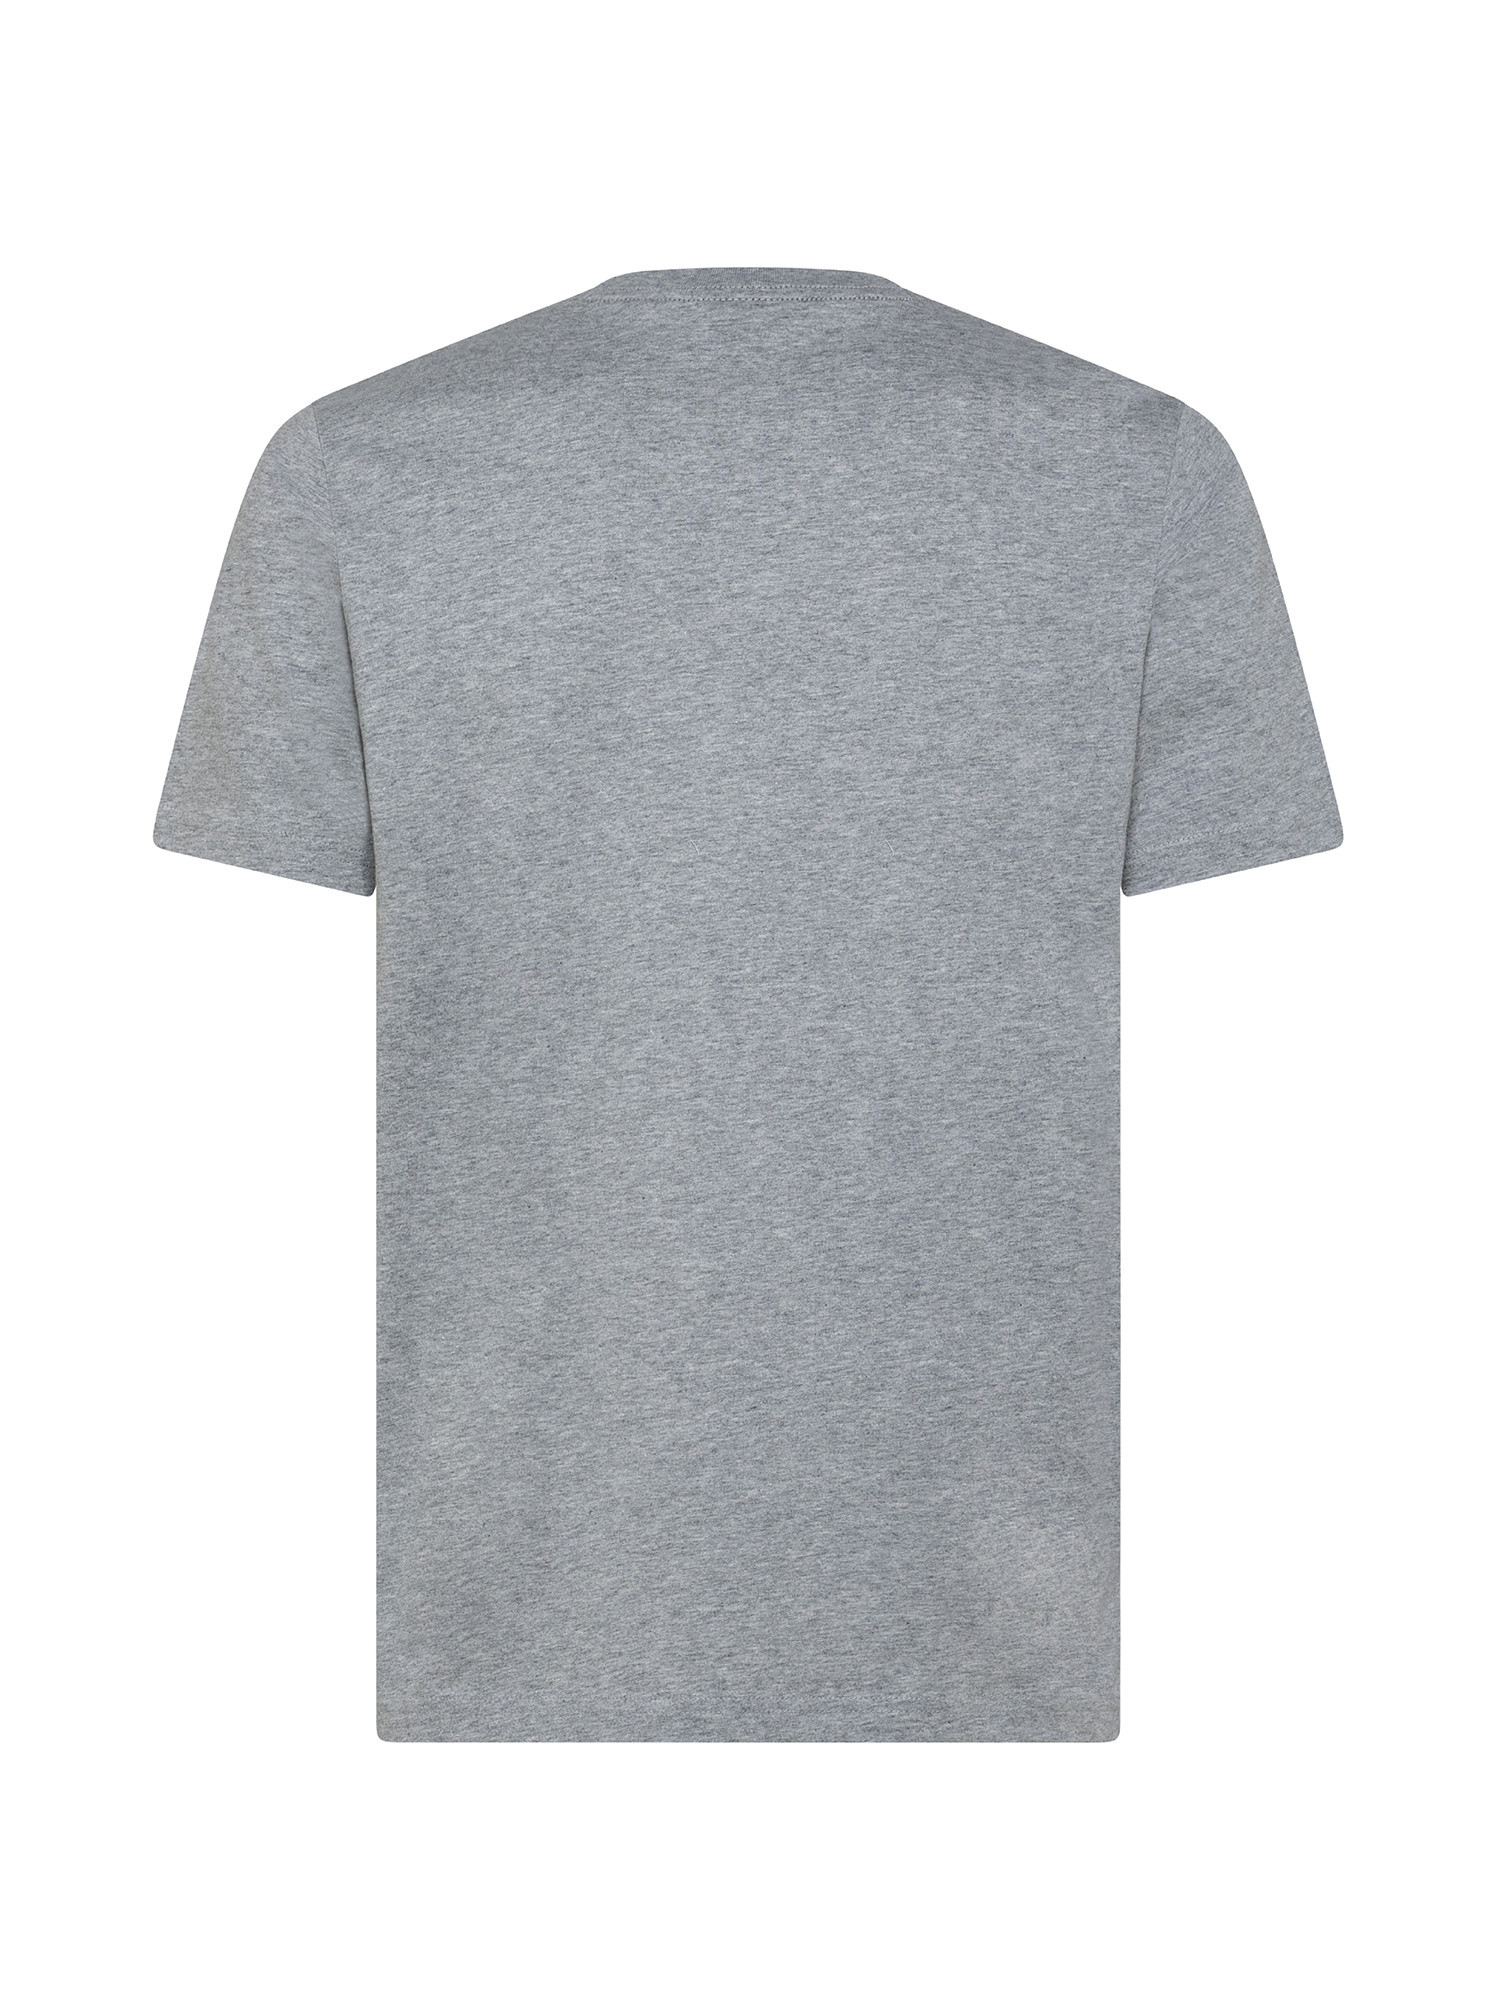 Skull print T-shirt, Grey, large image number 1